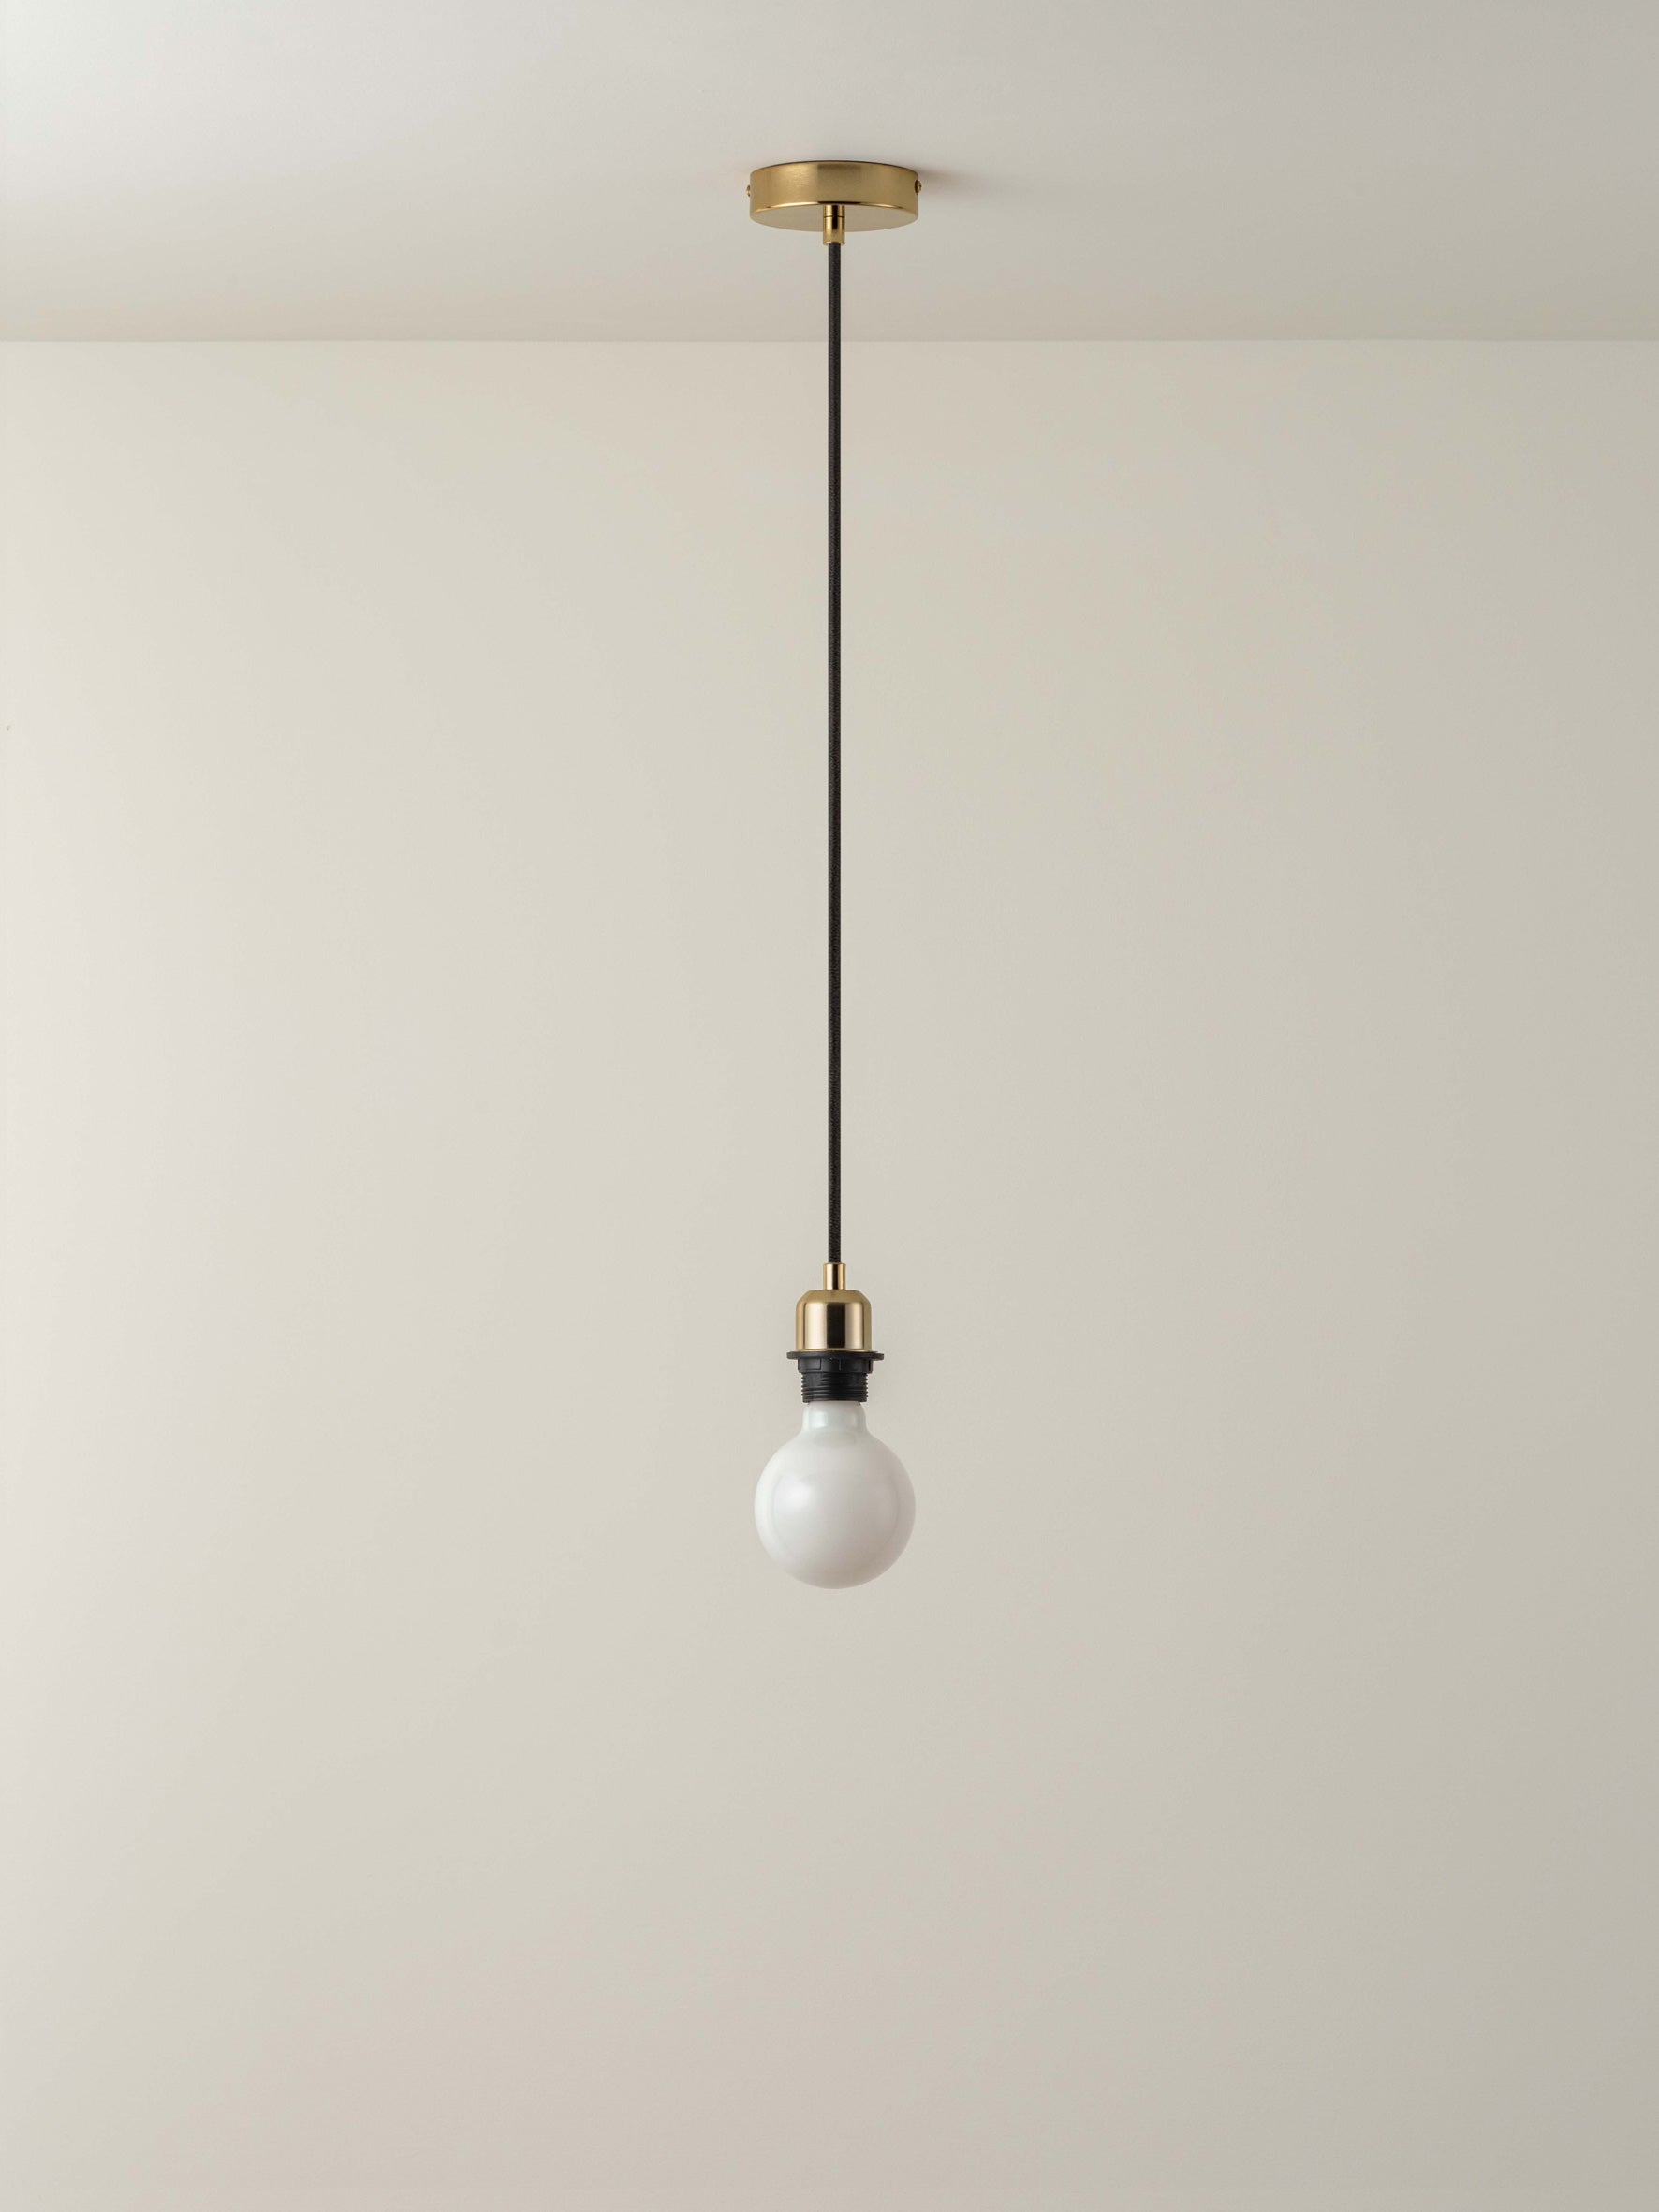 Capel - 1 light brass drop cap lampholder kit | Ceiling Light | Lights & Lamps | UK | Modern Affordable Designer Lighting